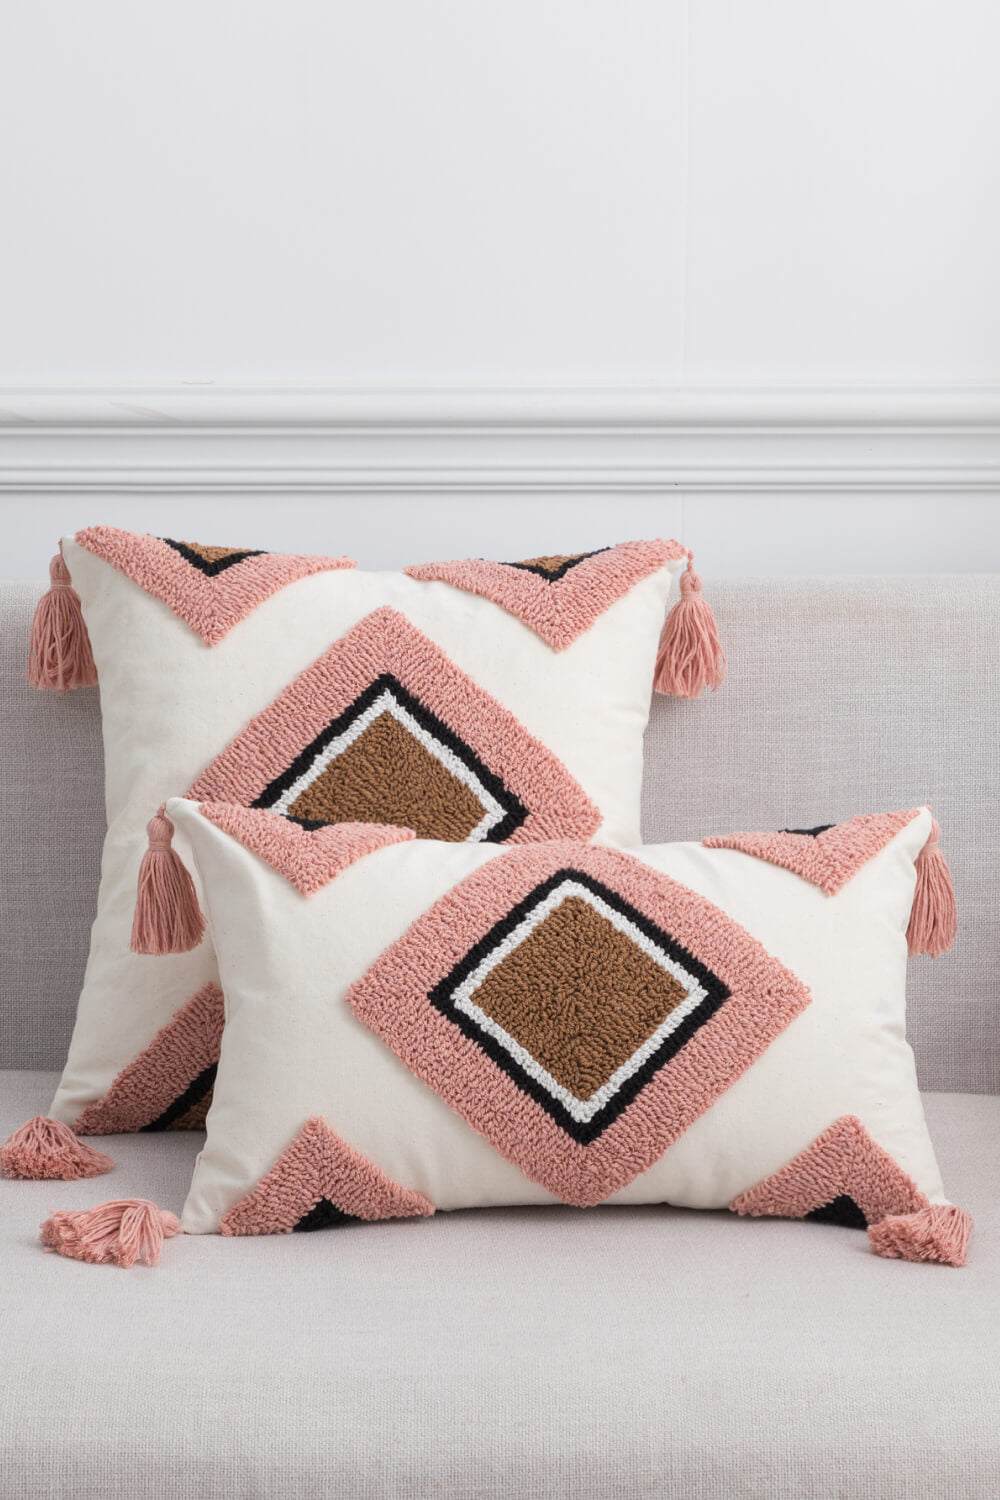 HOME—Decorative Throw Pillow Case--Geometric Graphic Tassel